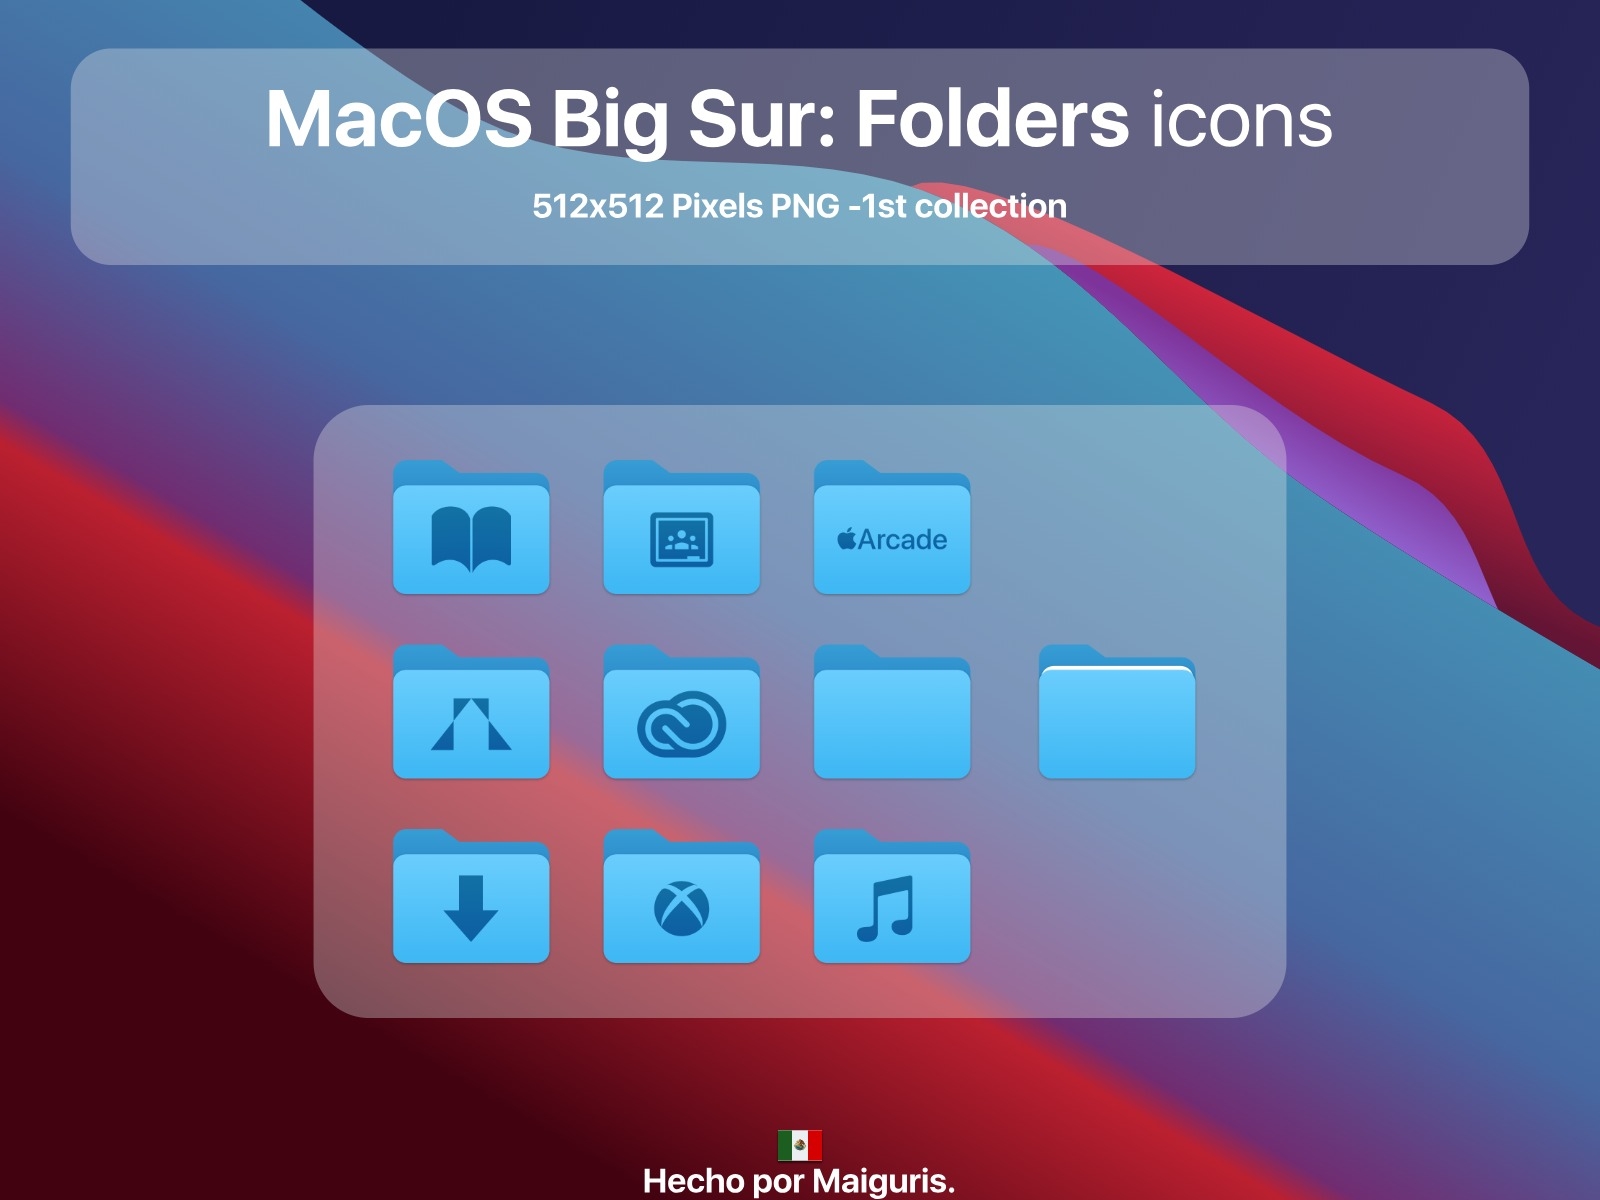 Macos Big Sur Folder Icon How To Use Custom App Icons On Macos Big